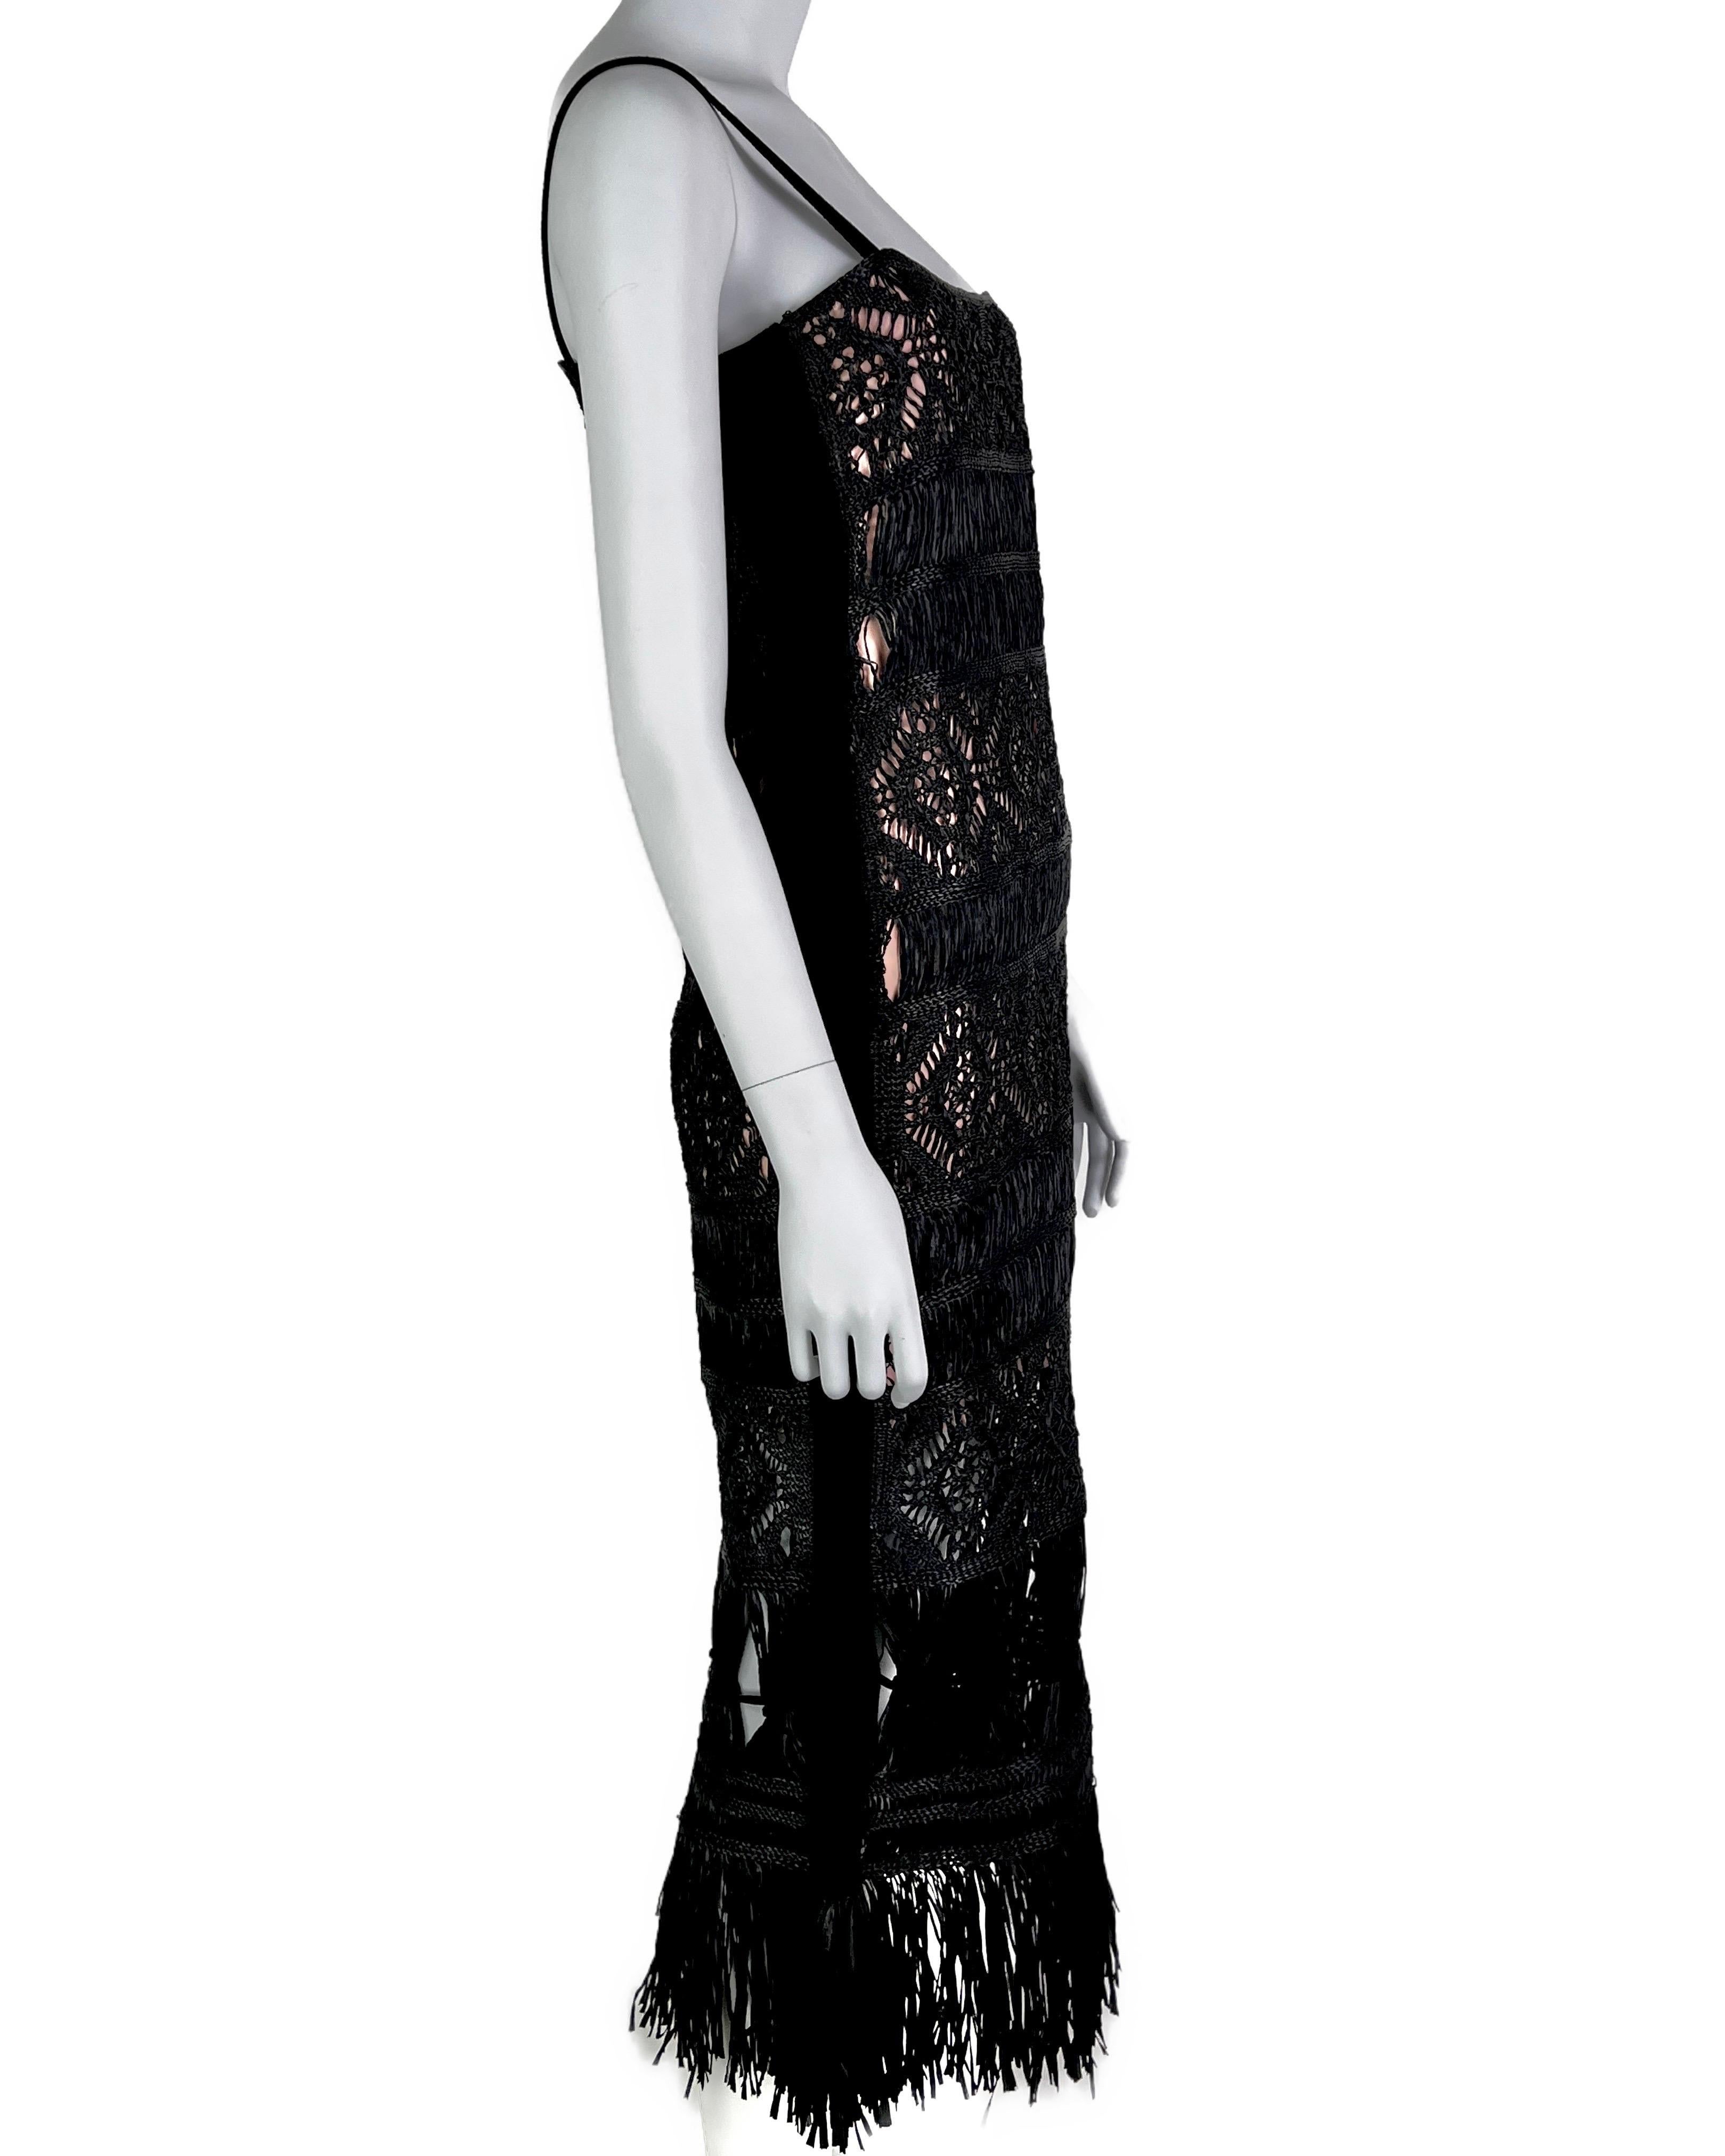 Jean-Paul Gaultier Spring 2013 Braided Raffia Dress For Sale 4